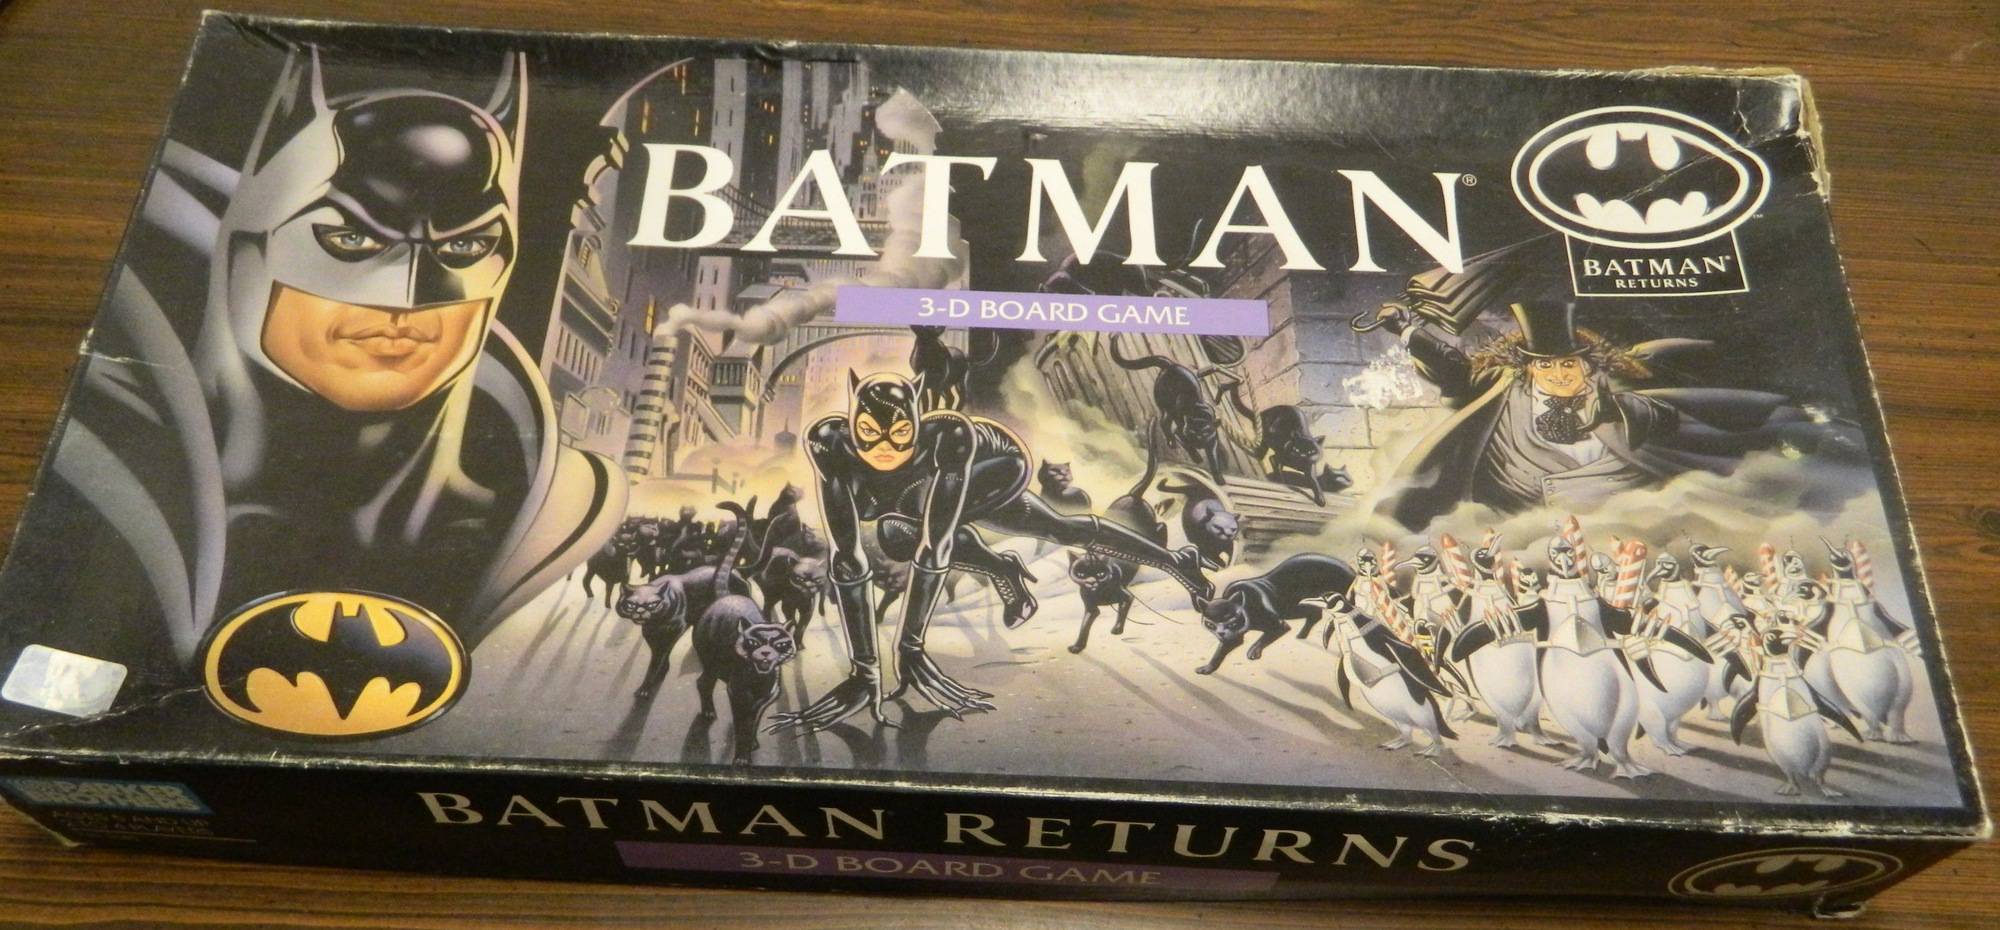 Box for Batman 3D Board Game